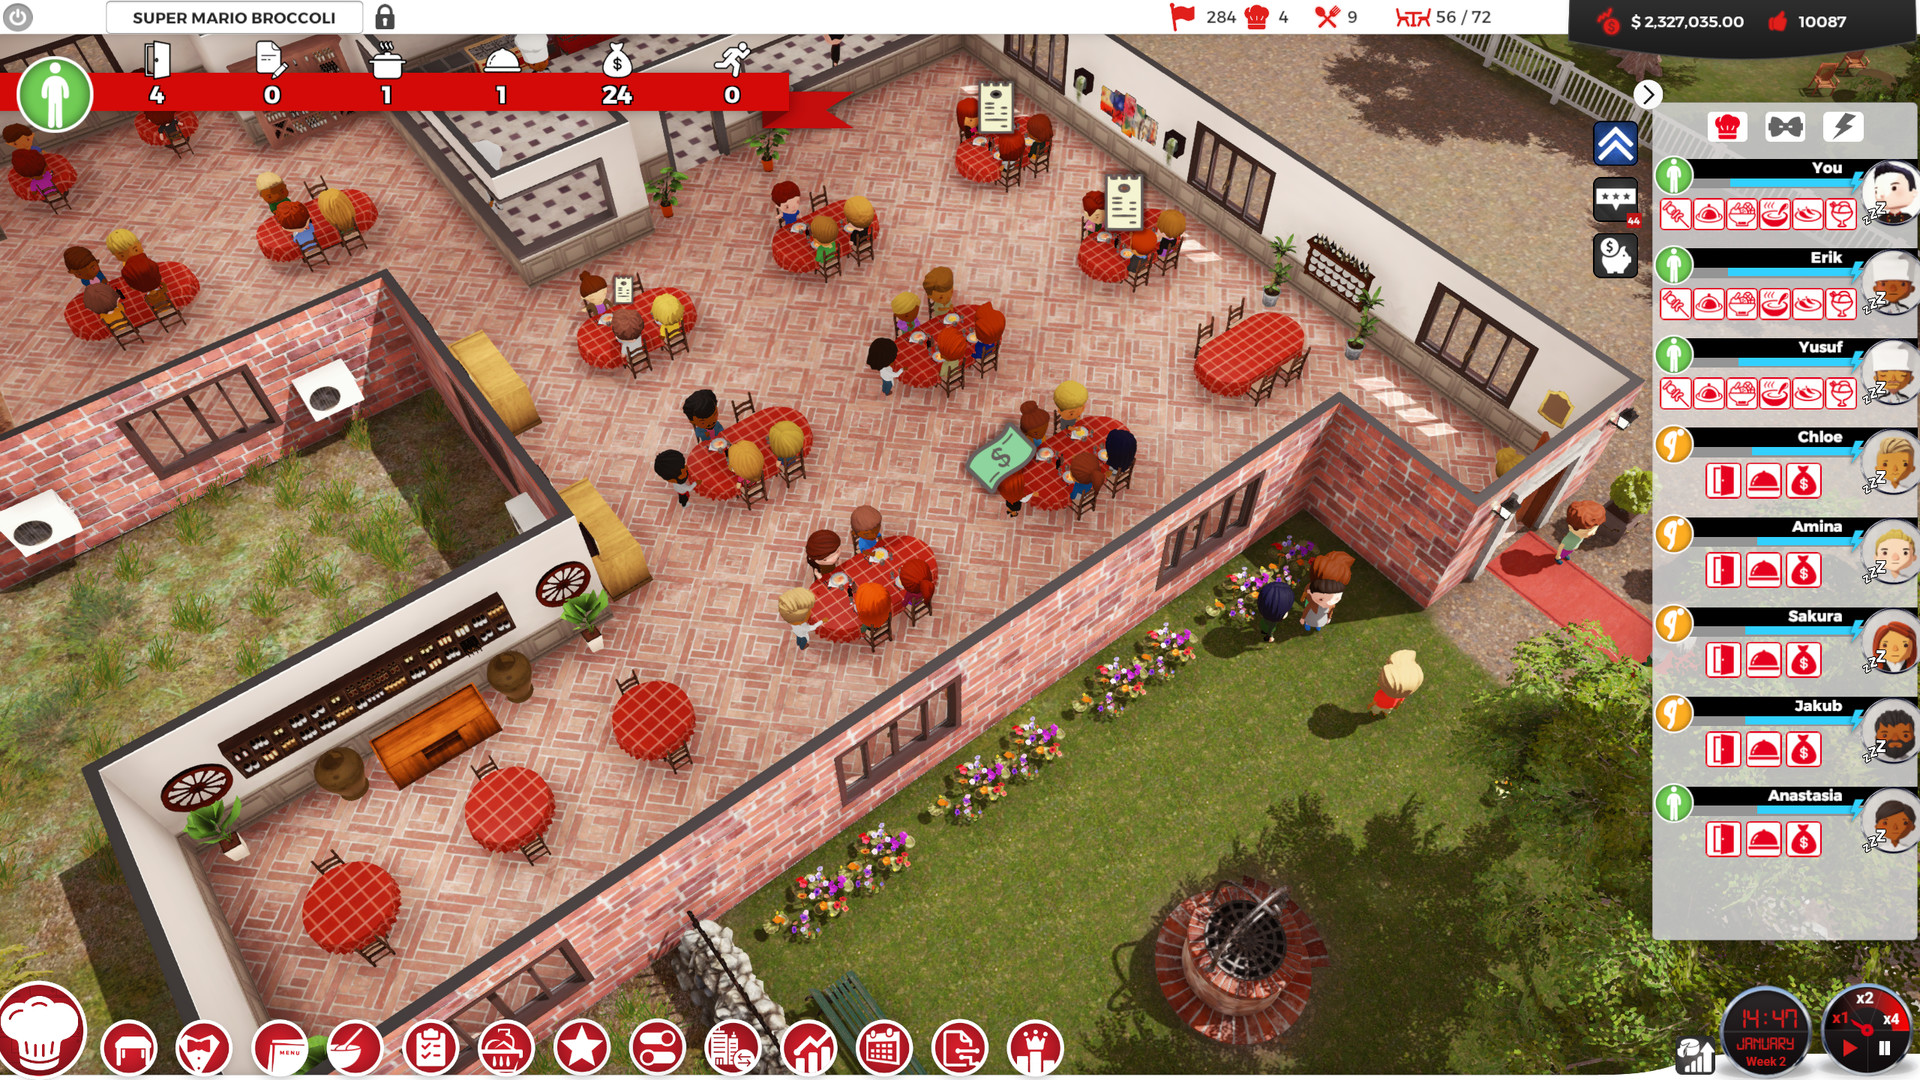 Chef A Restaurant Tycoon Game On Steam - roblox good restaurants games